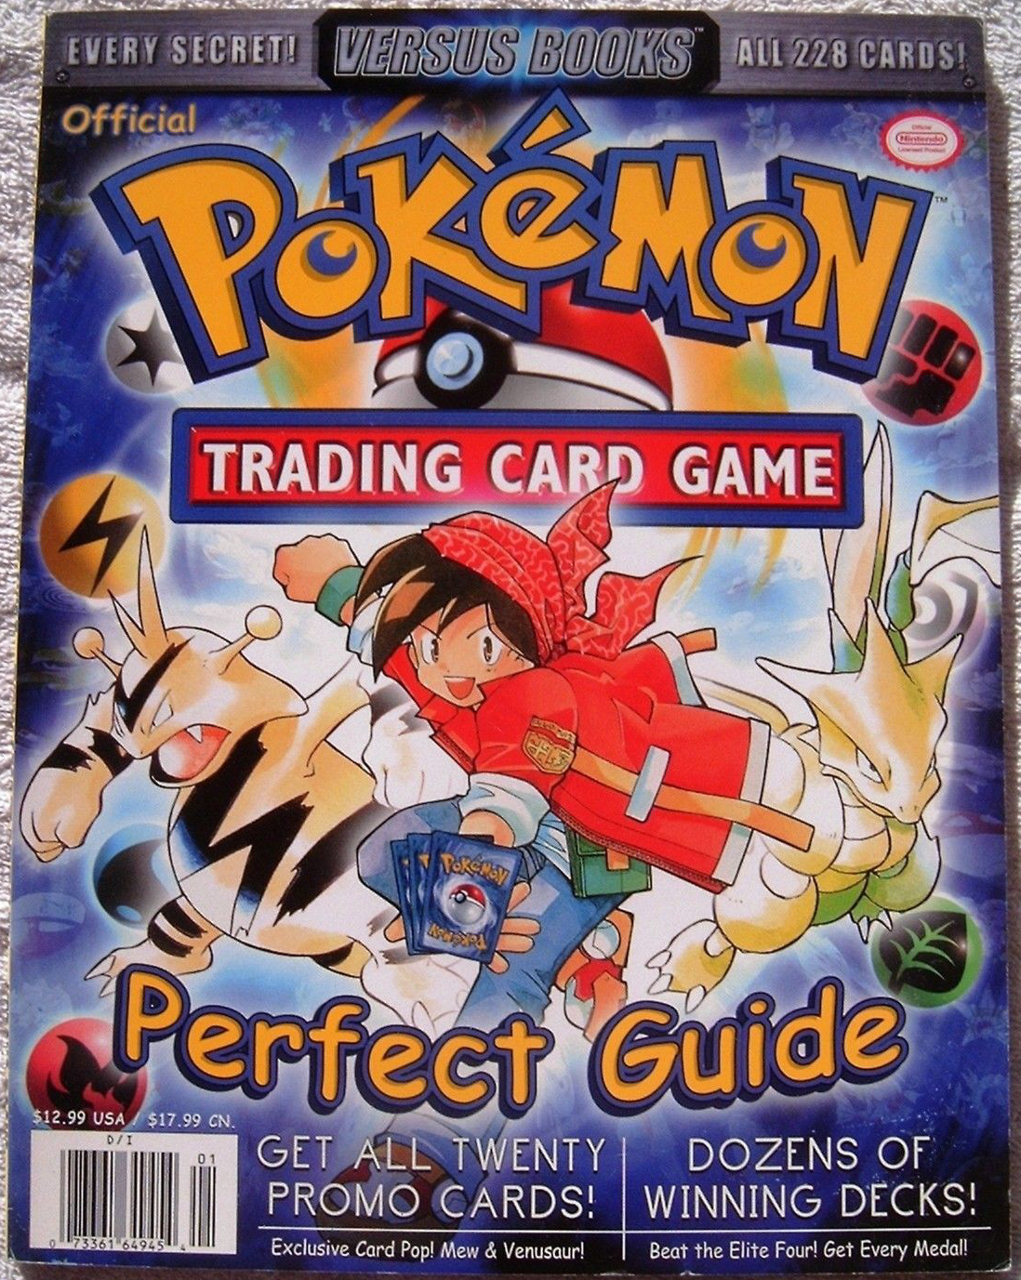 Pokémon Trading Card Game Perfect Guide - community-driven Pokémon encyclopedia